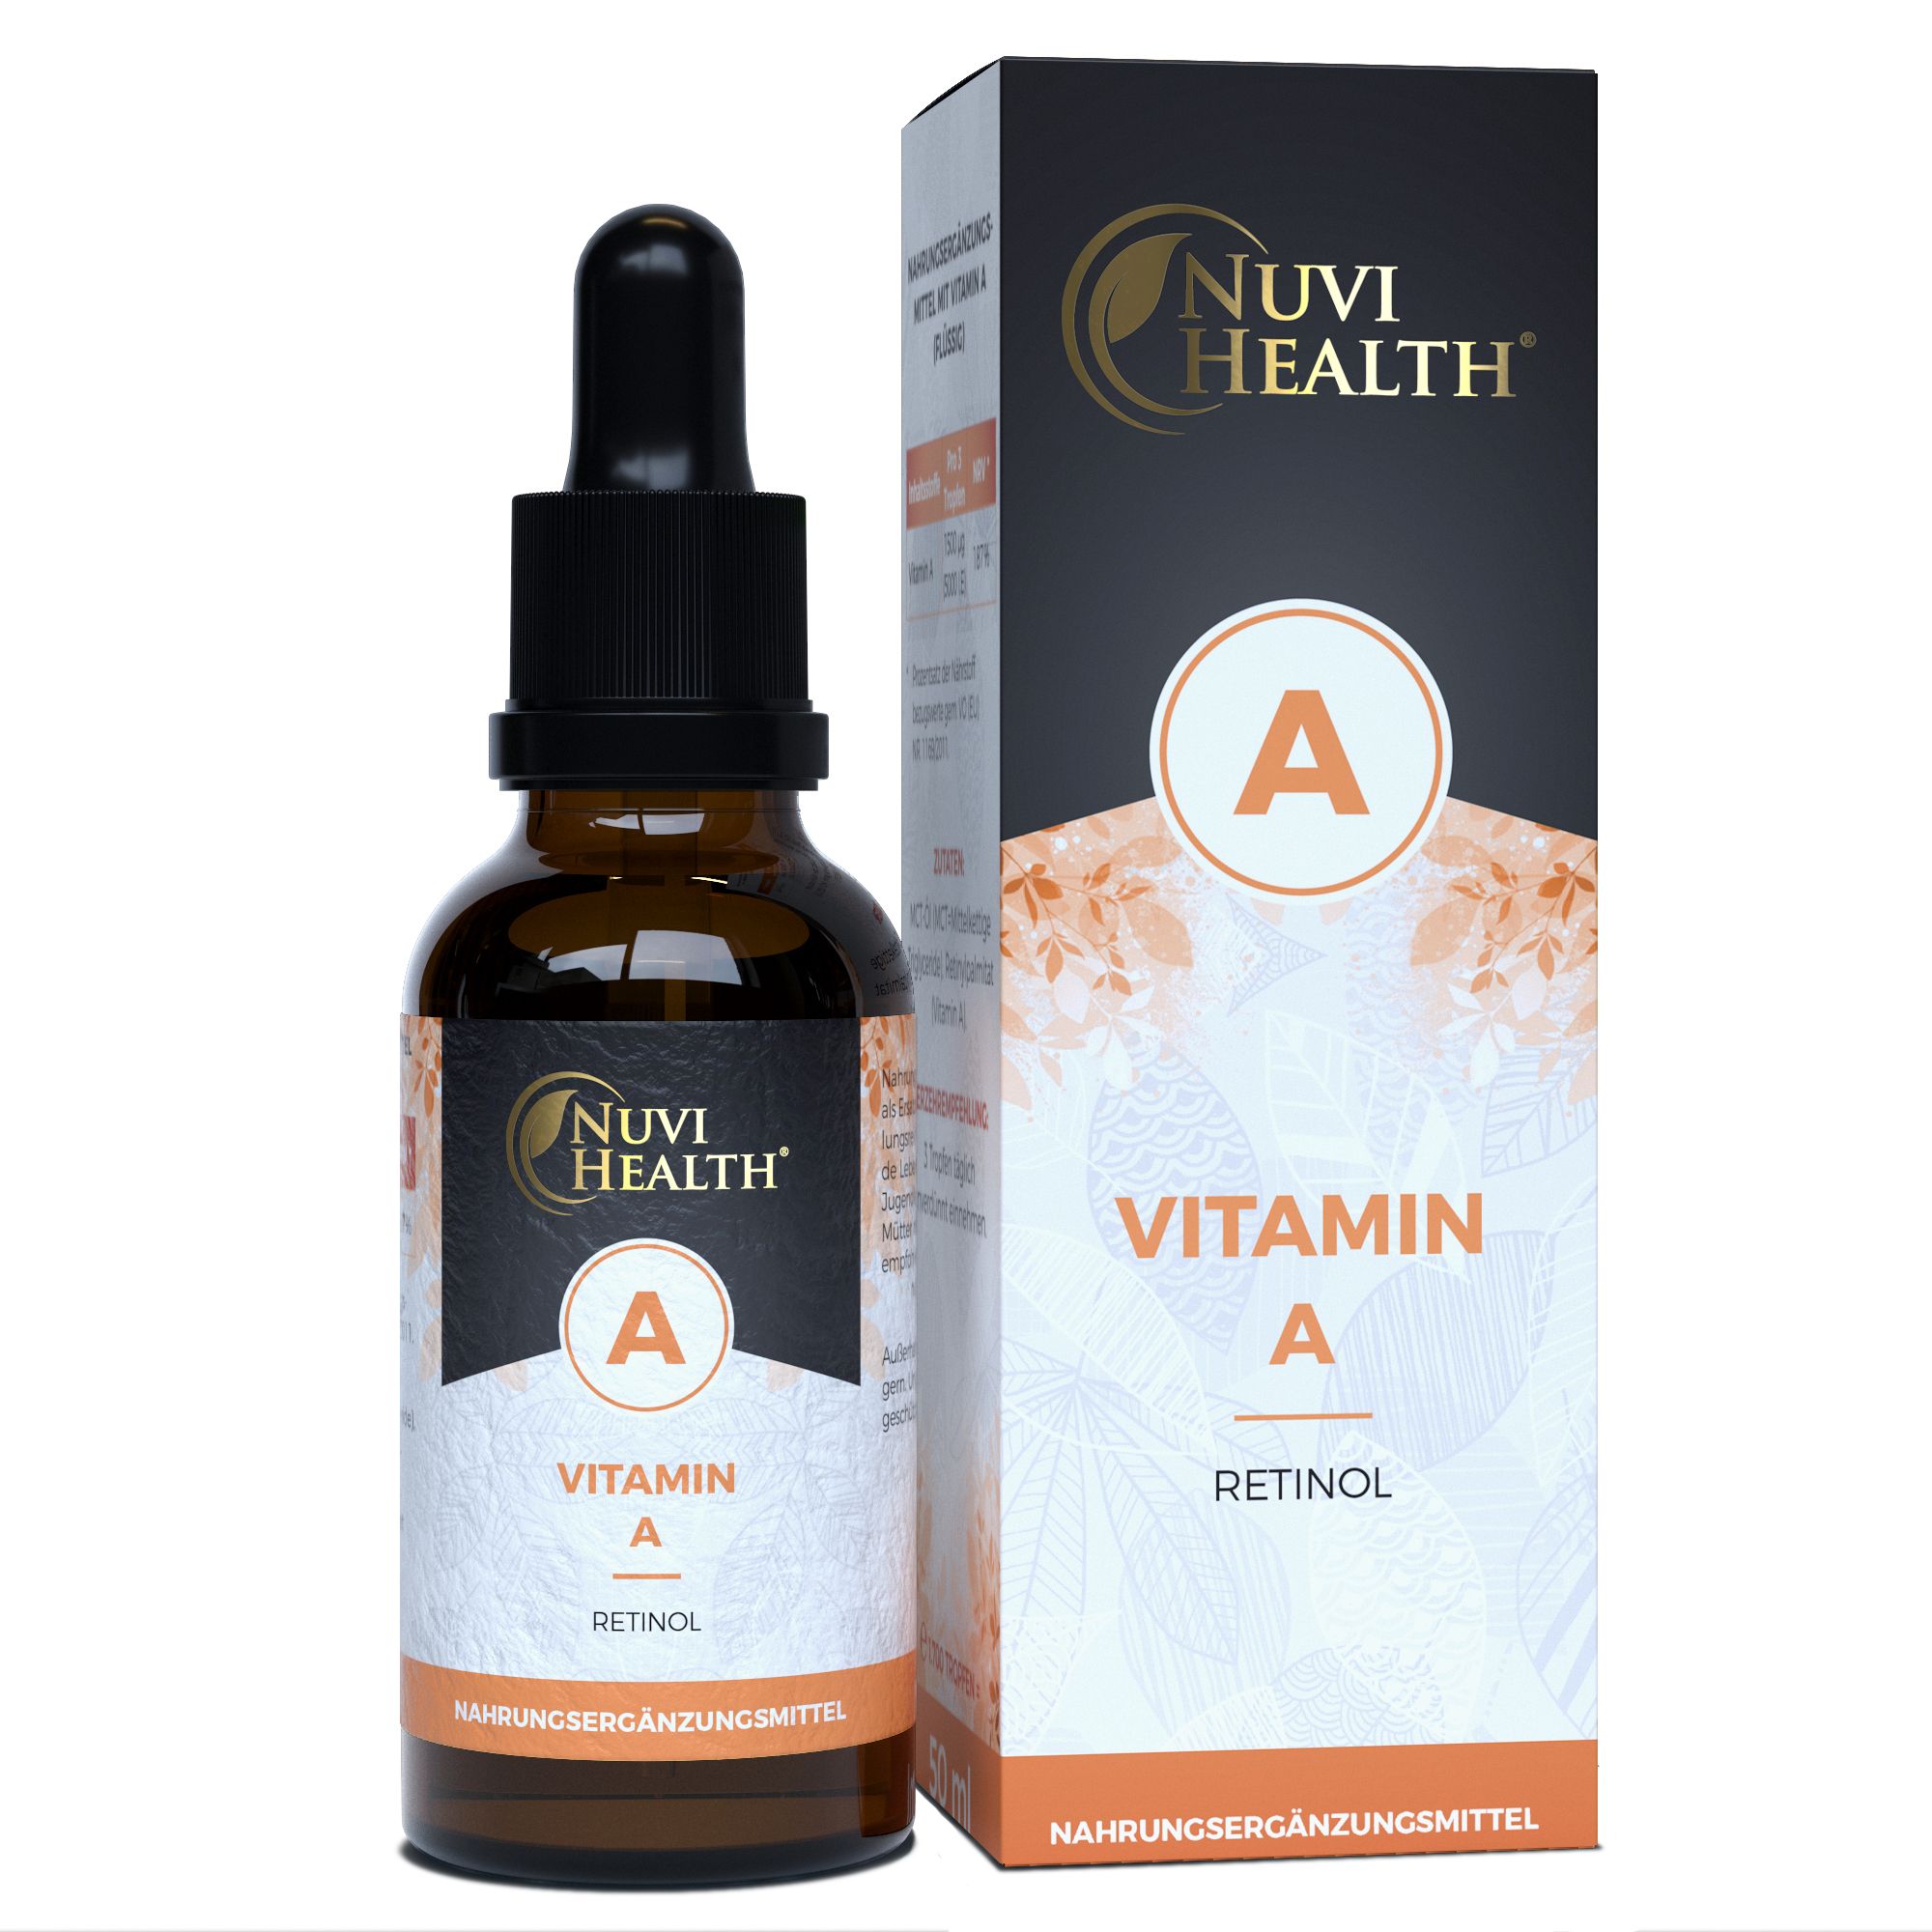 Nuvi Health Vitamin A Retinol- 5000 I.E (1500 µg)